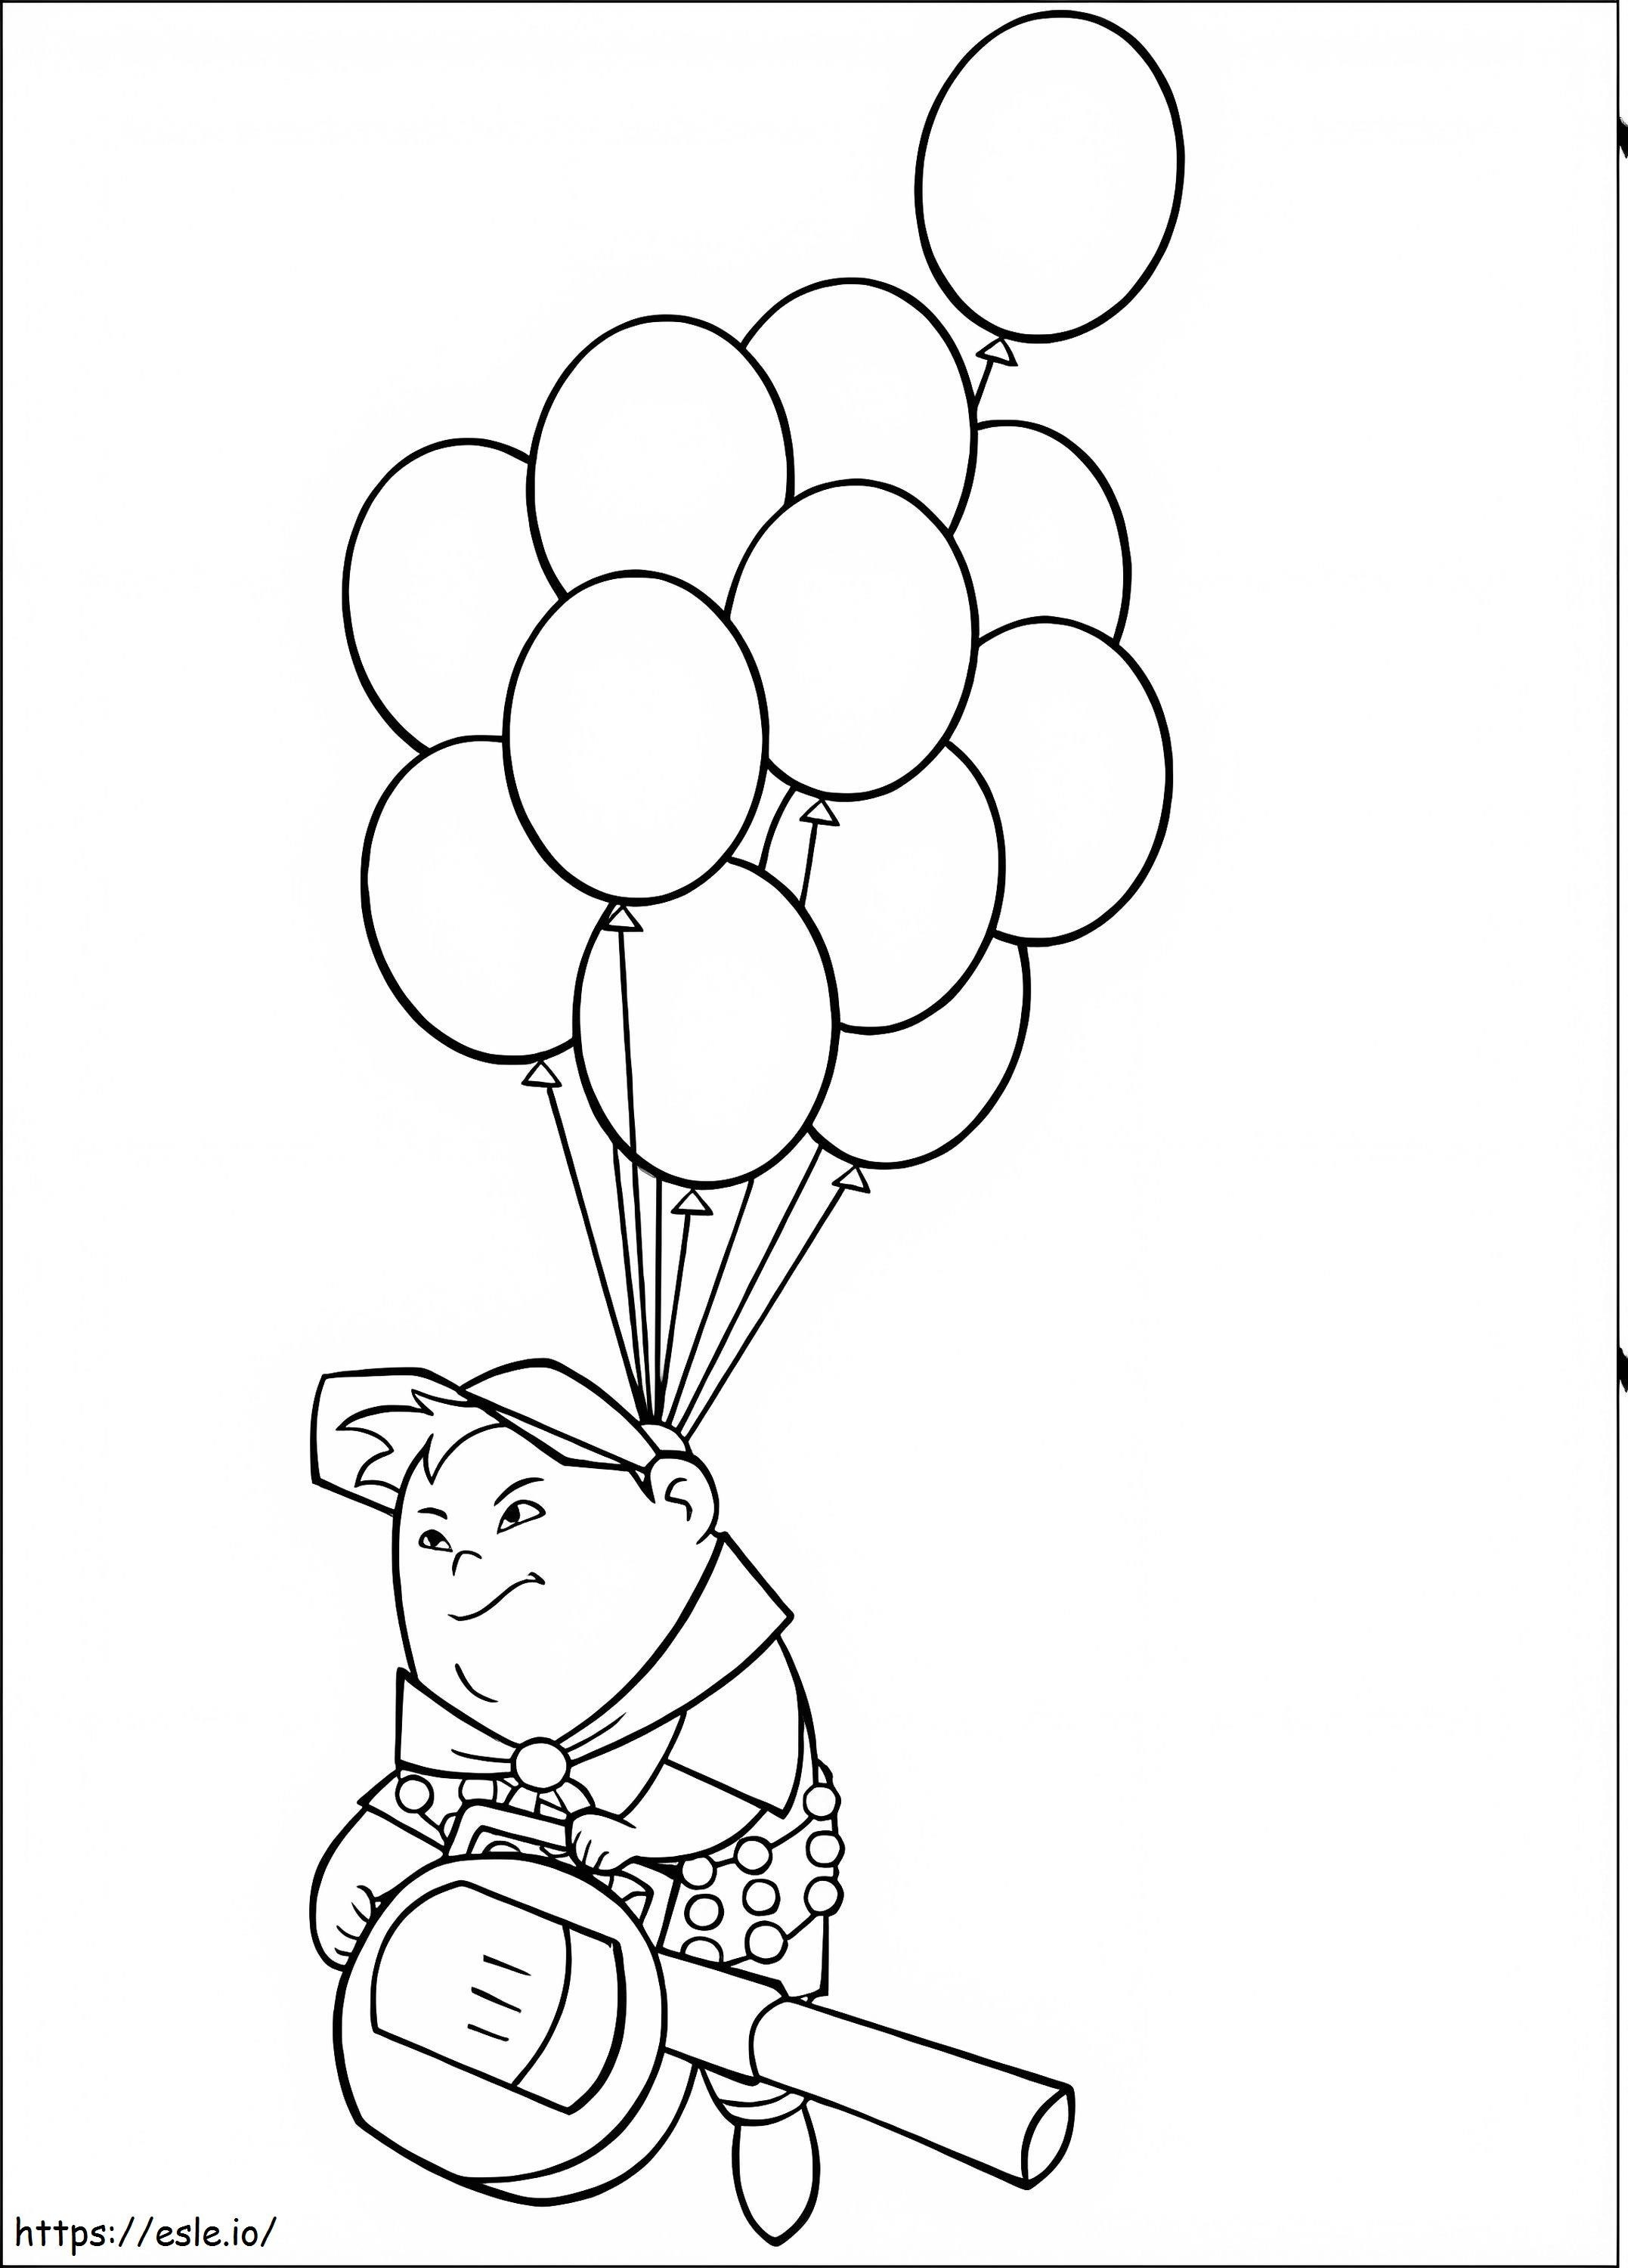 Russell lecący balonem kolorowanka